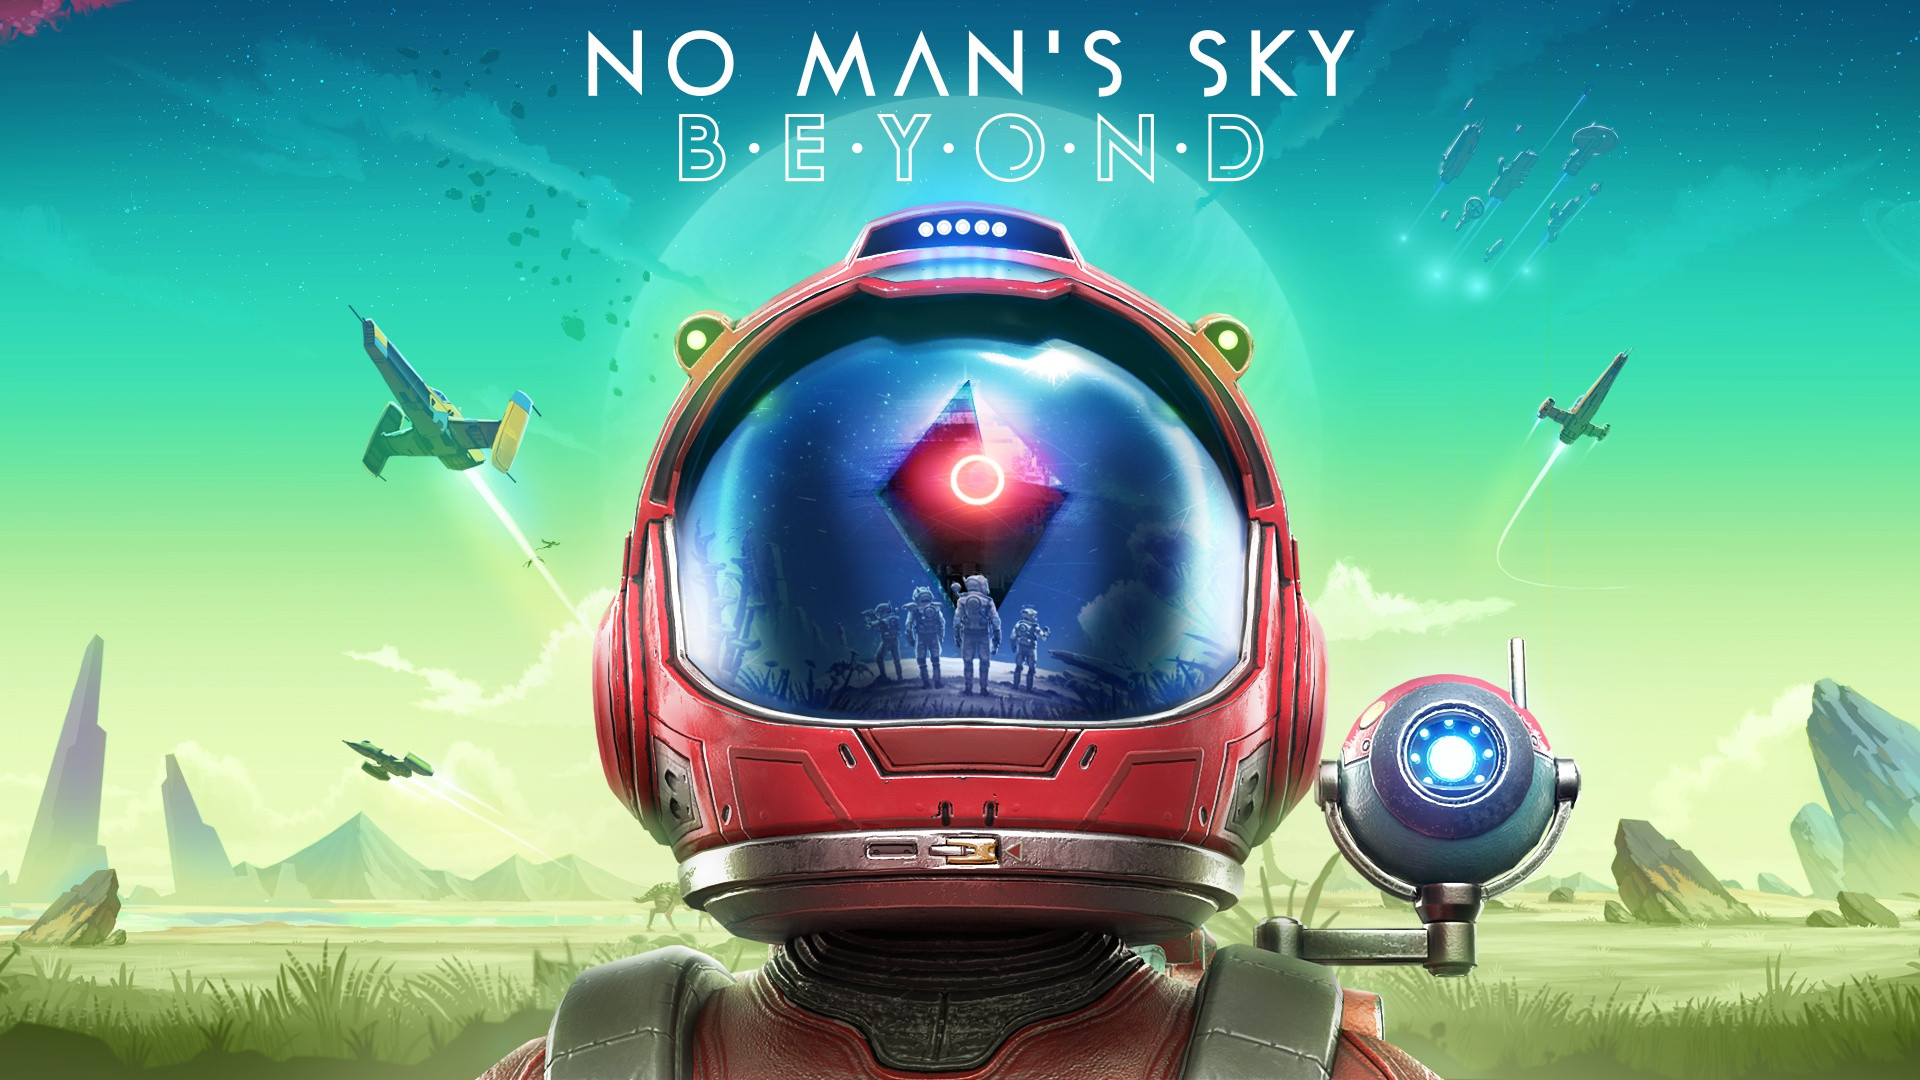 تابع أحدث التحديثات حتى الآن مع No No’s’s Sky على Xbox One